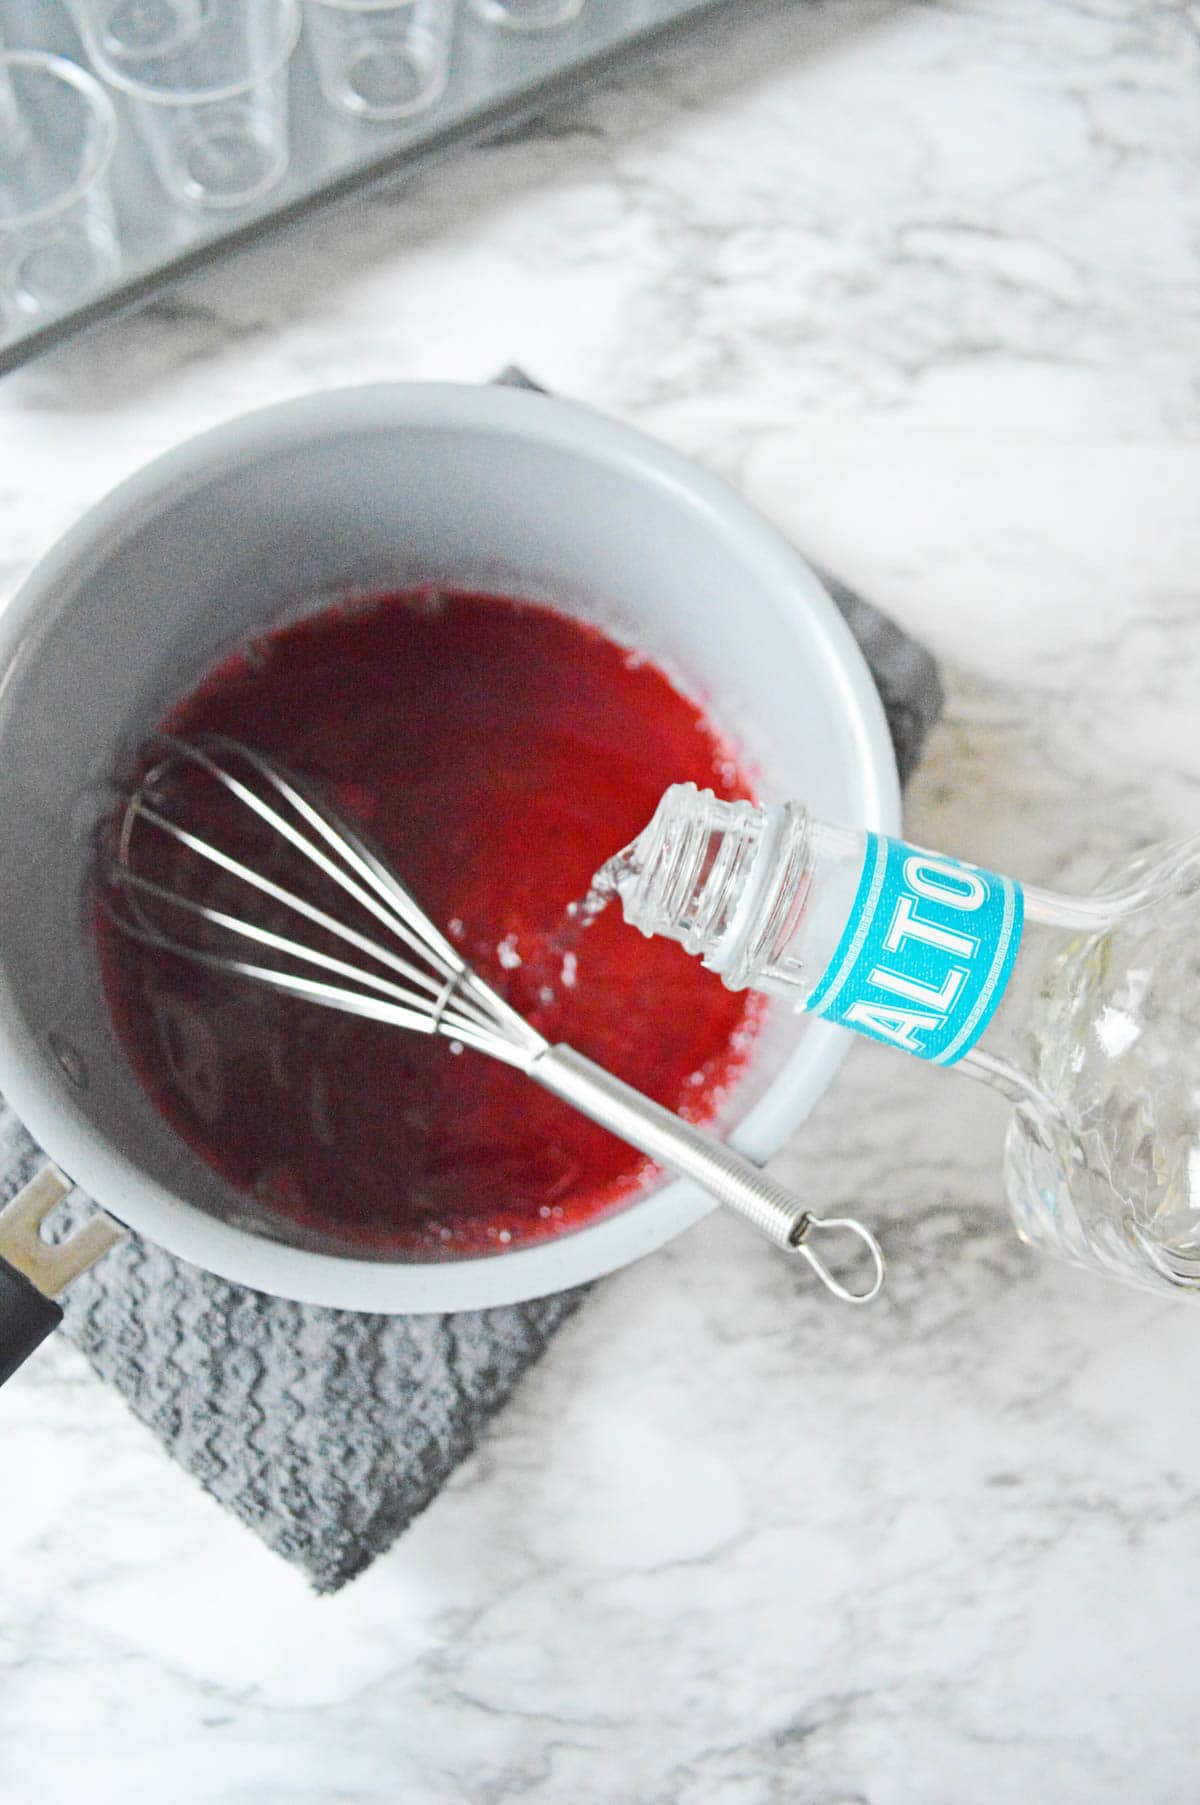 Adding alcohol to cherry jello